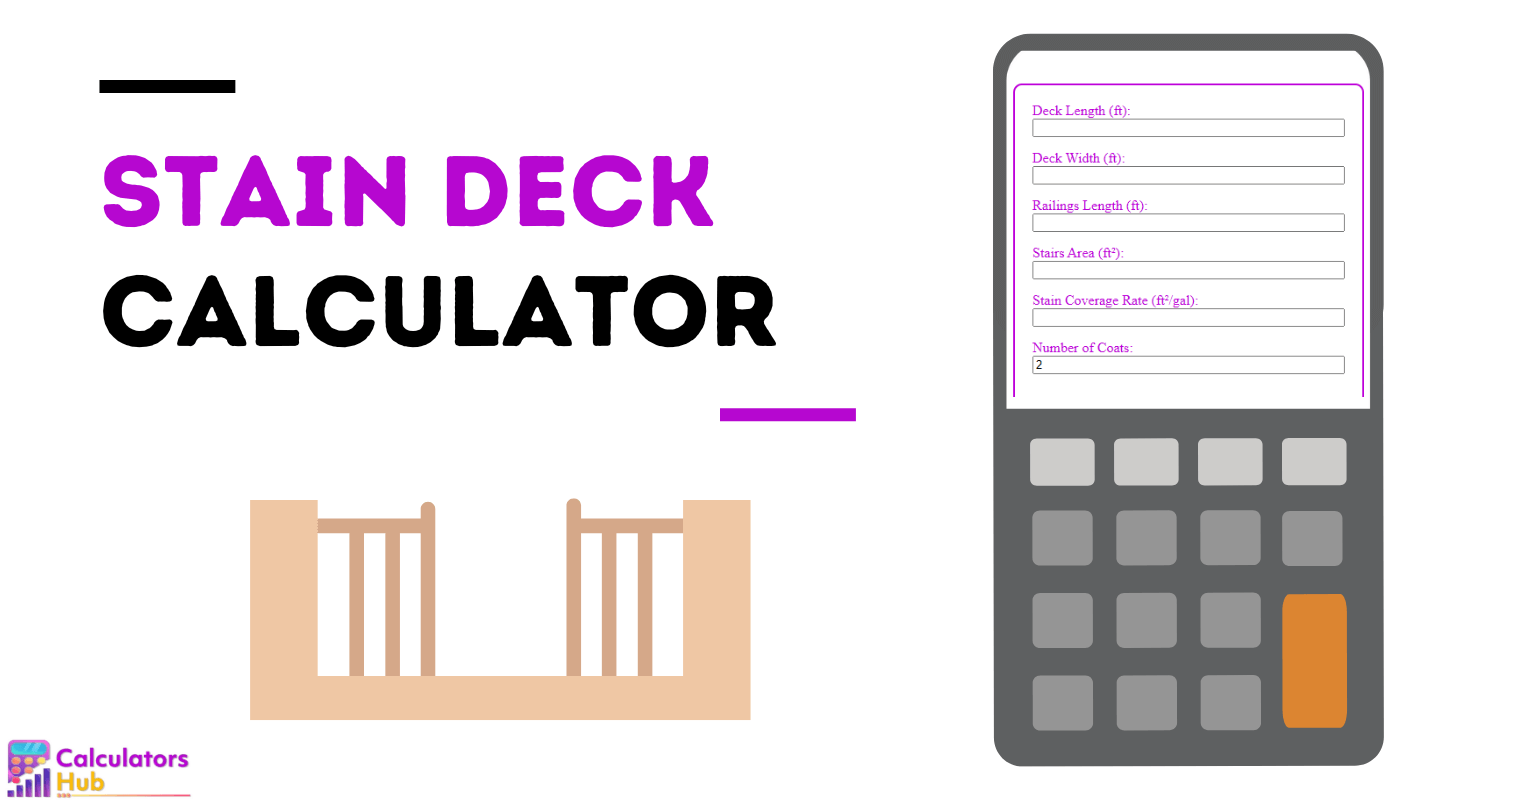 Stain Calculator Deck